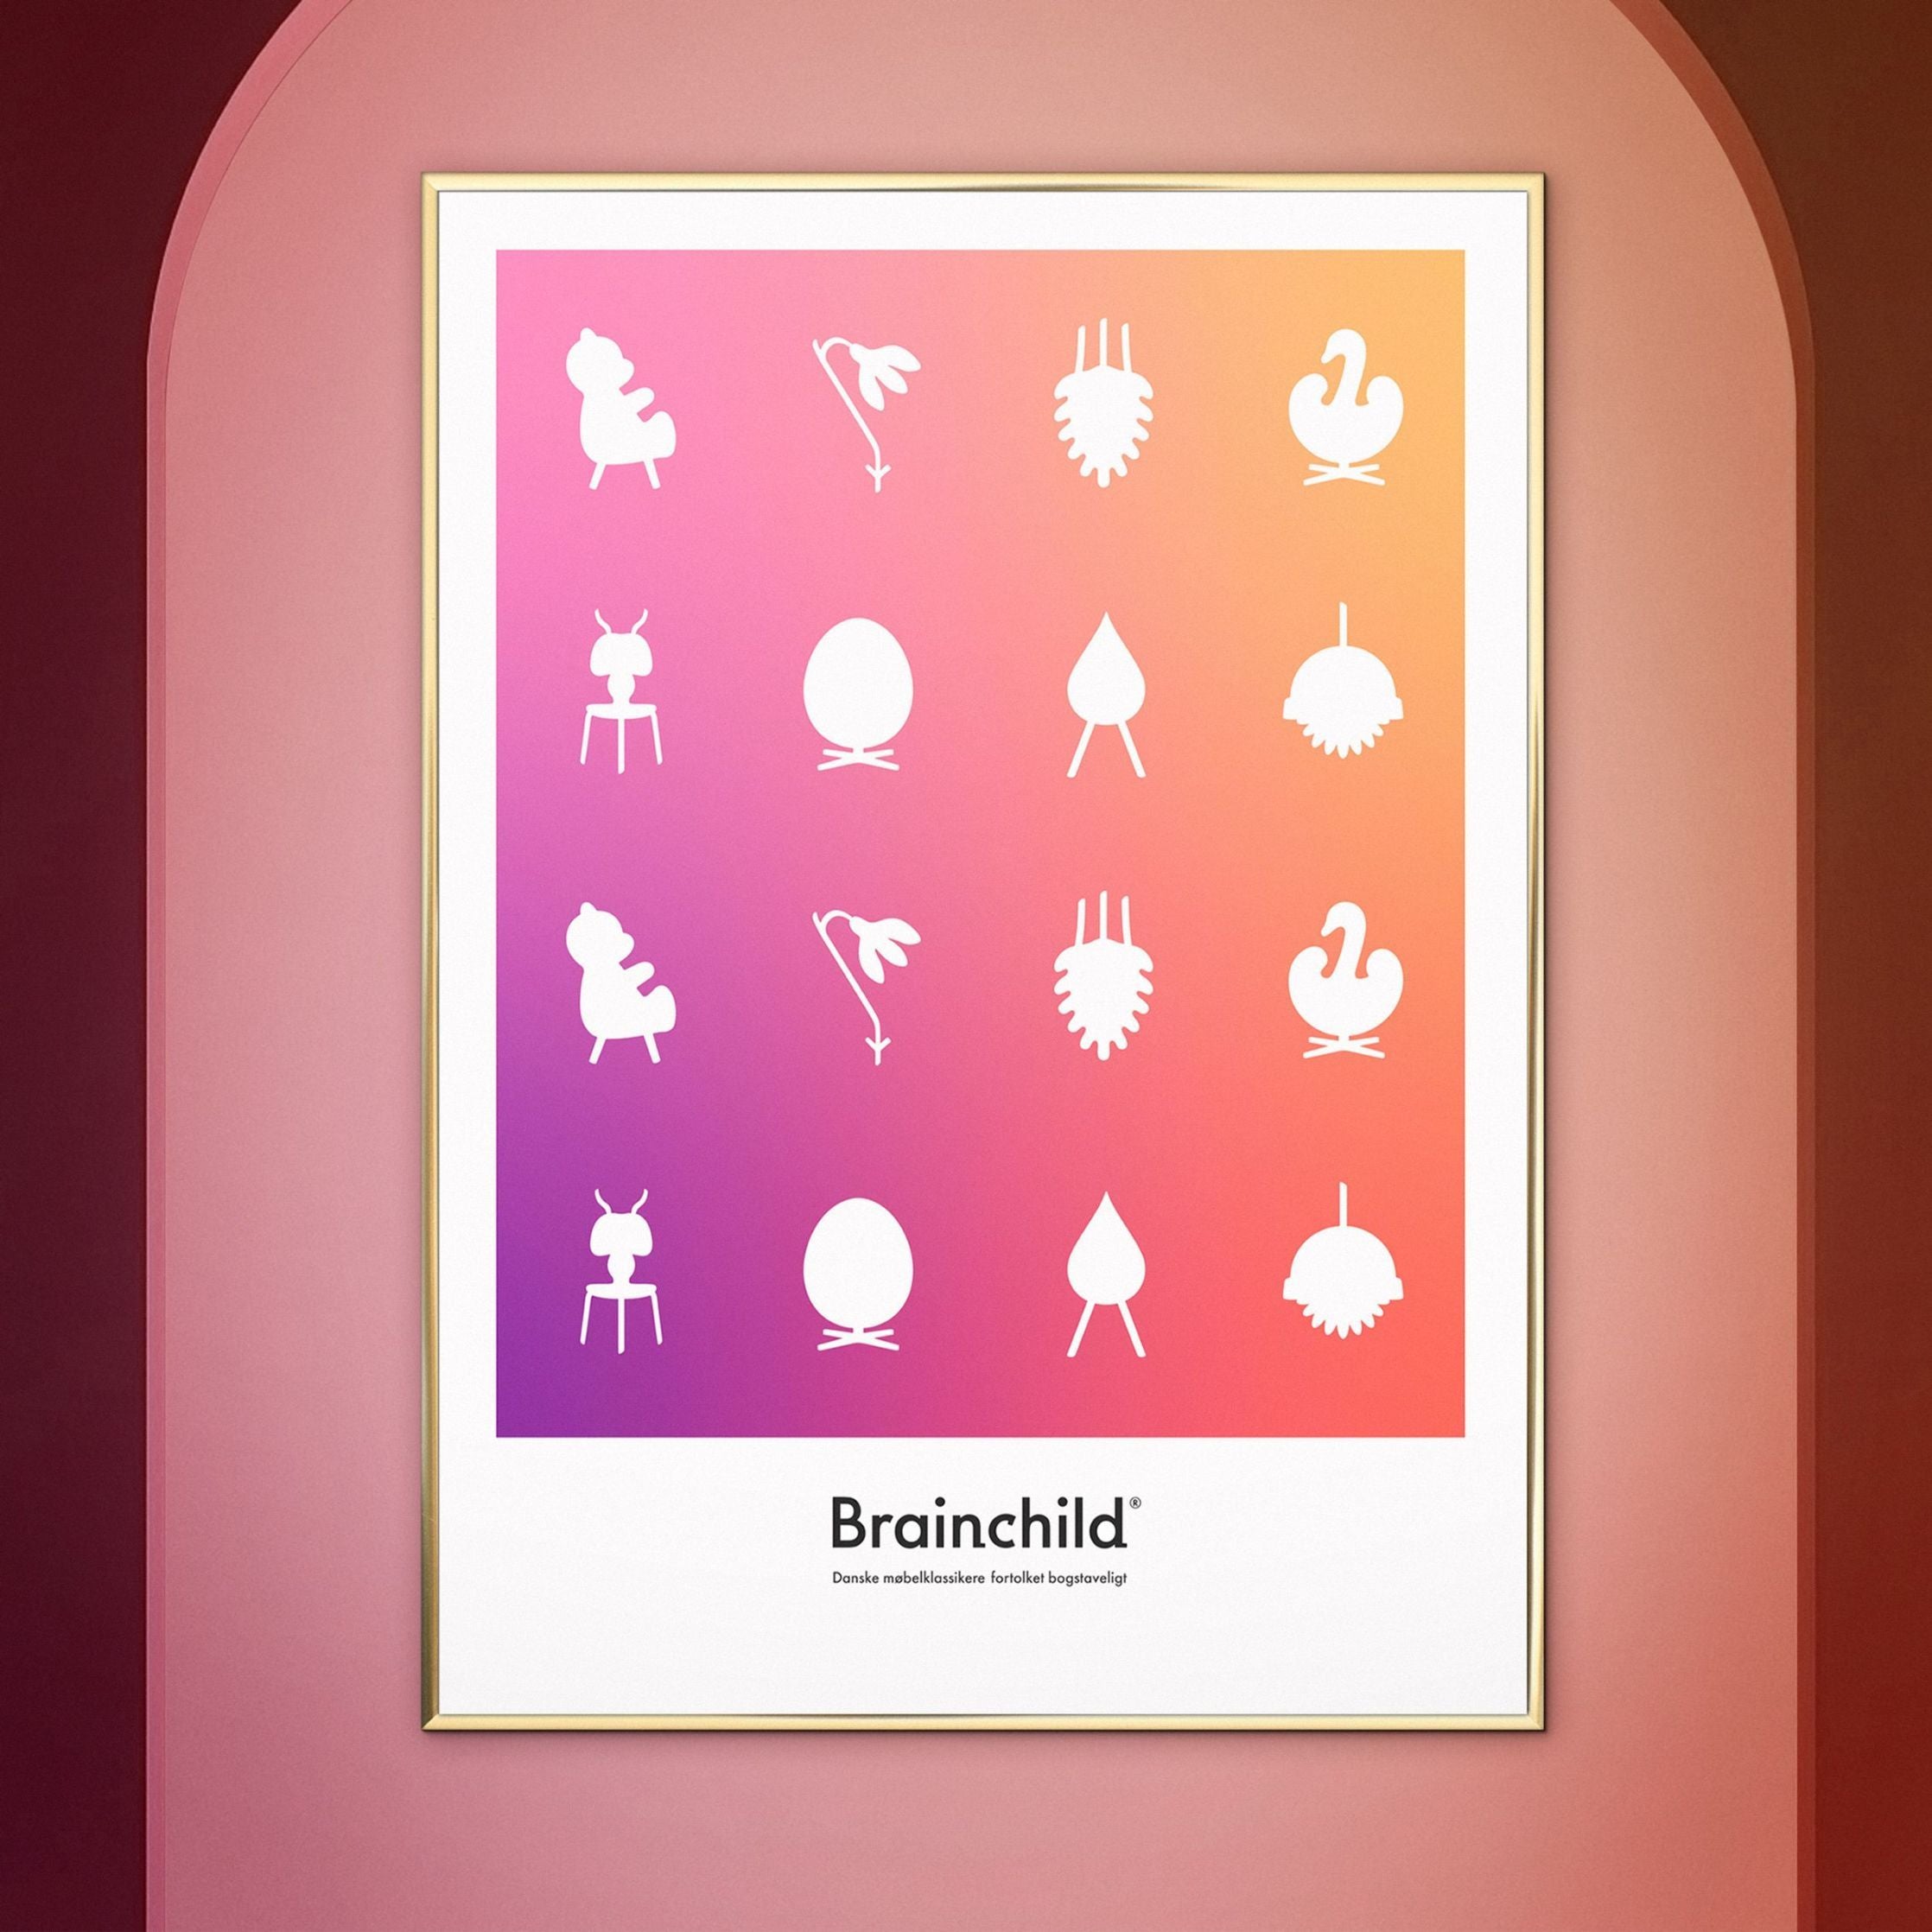 Brainchild Ontwerppictogram Poster, frame gemaakt van donker hout 30x40 cm, kleur